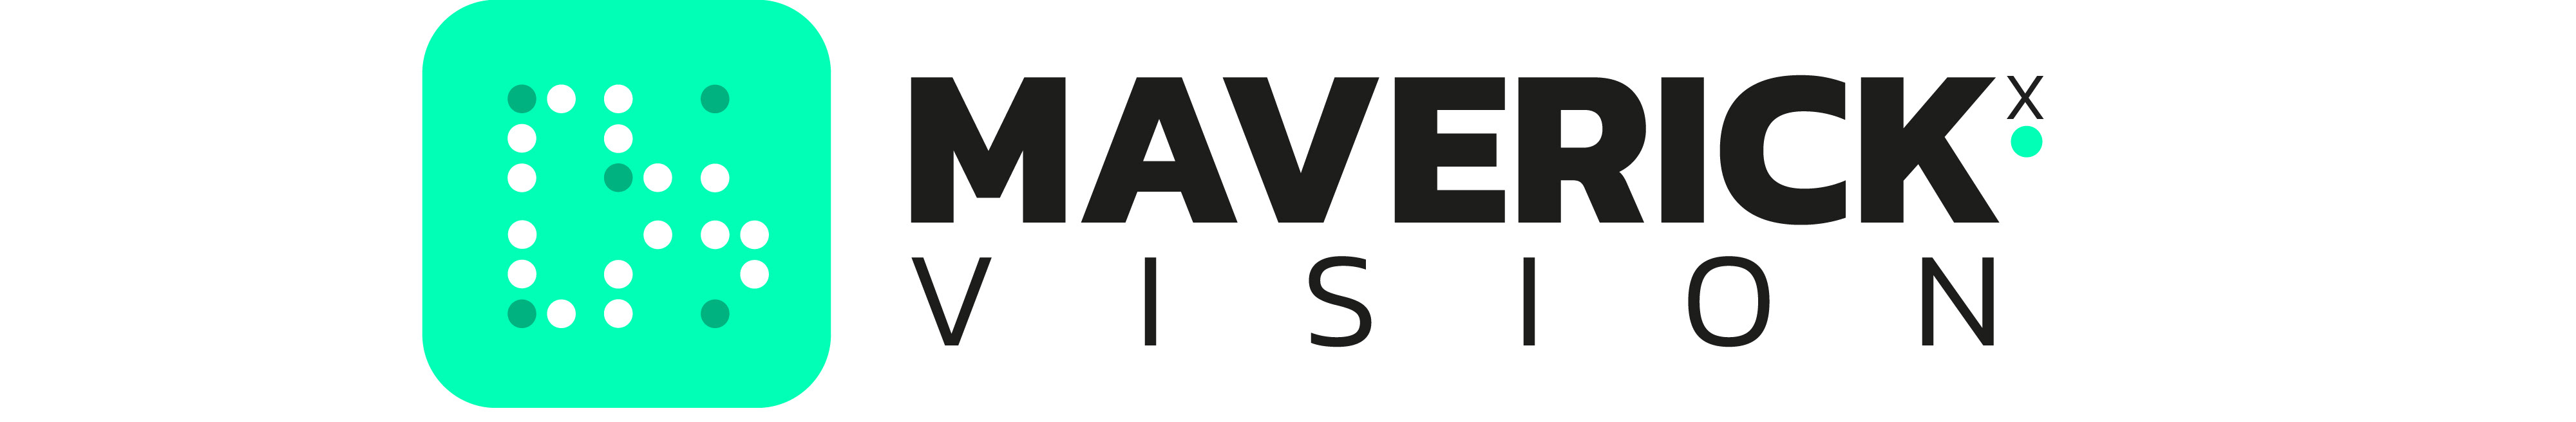 Maverick Vision's profile banner